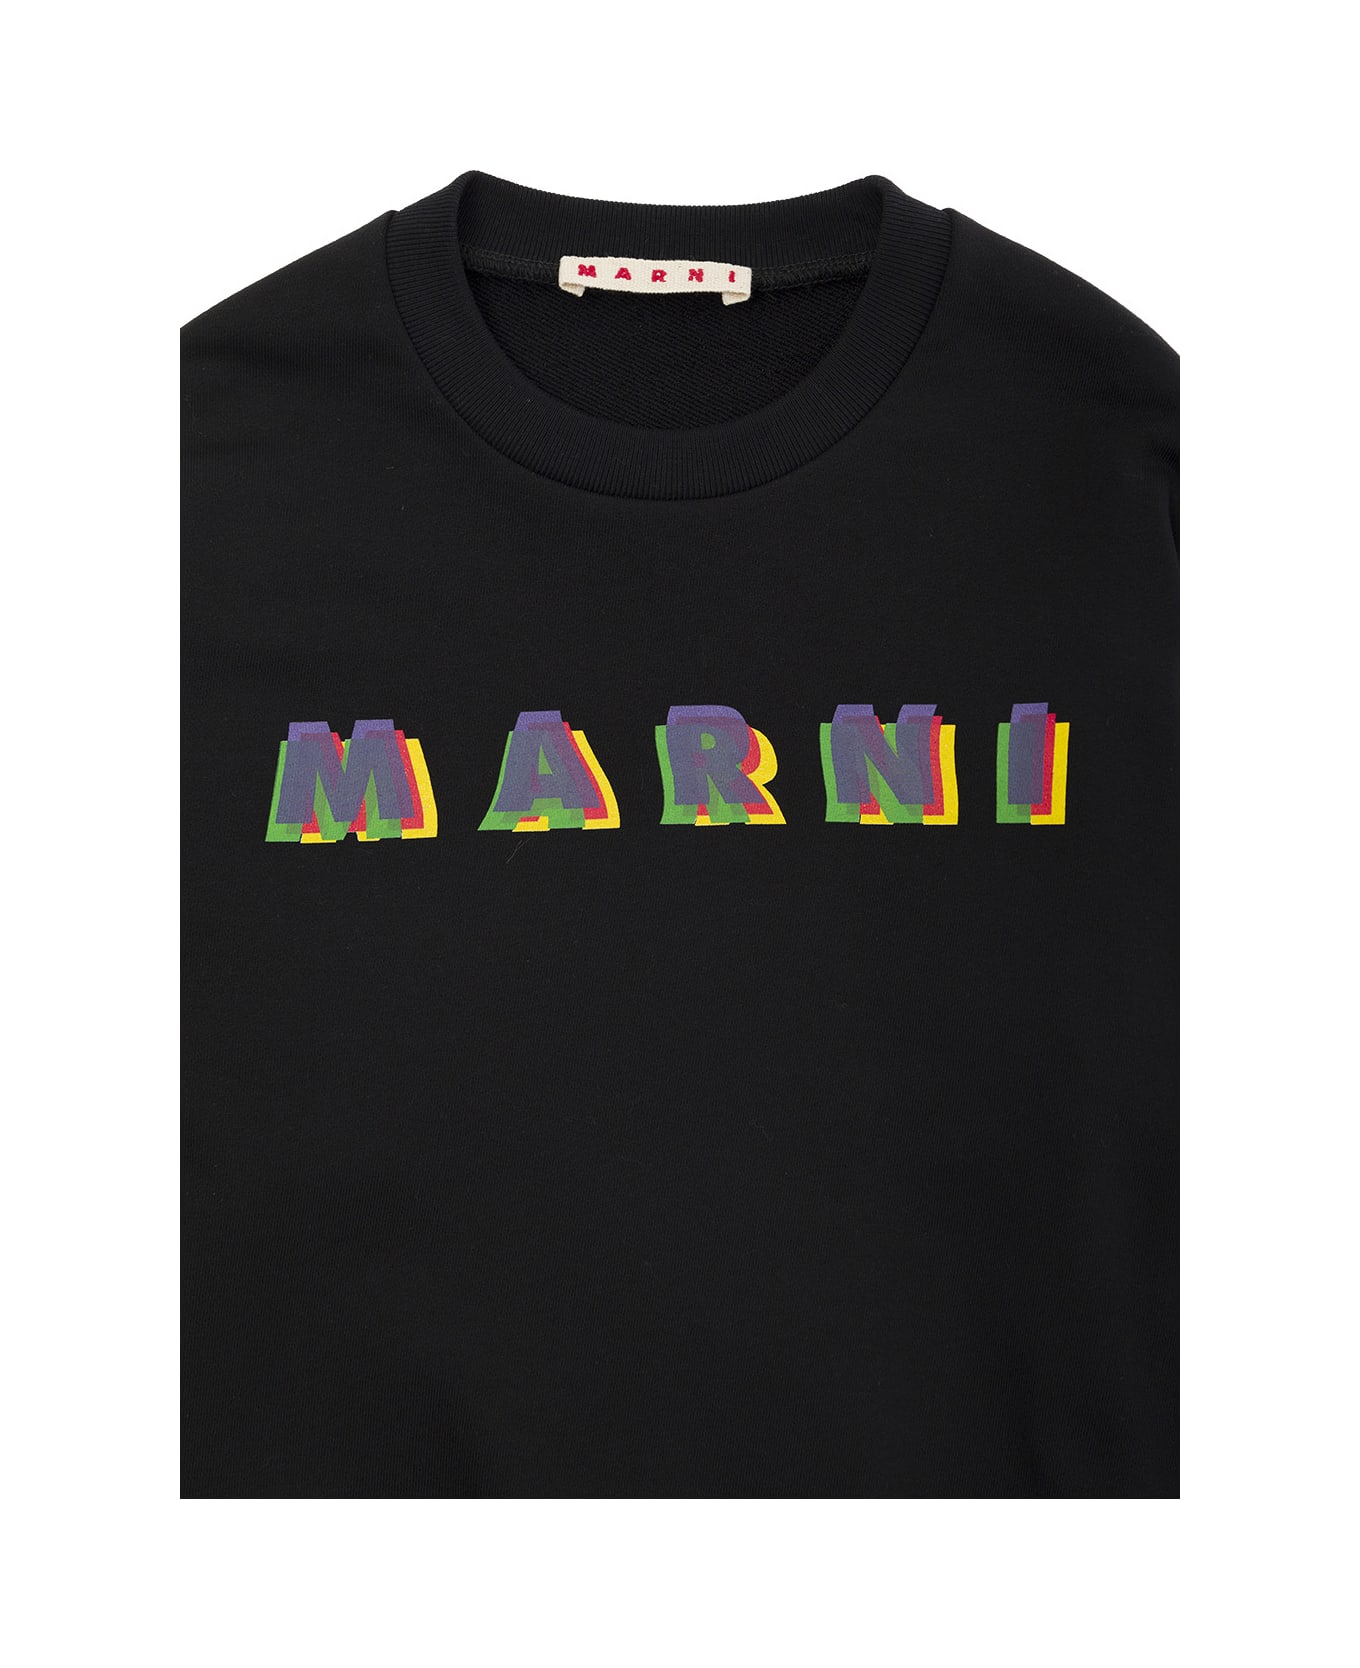 Marni Black Crewneck Sweatshirt With Logo Lettering Print In Cotton Boy - Black